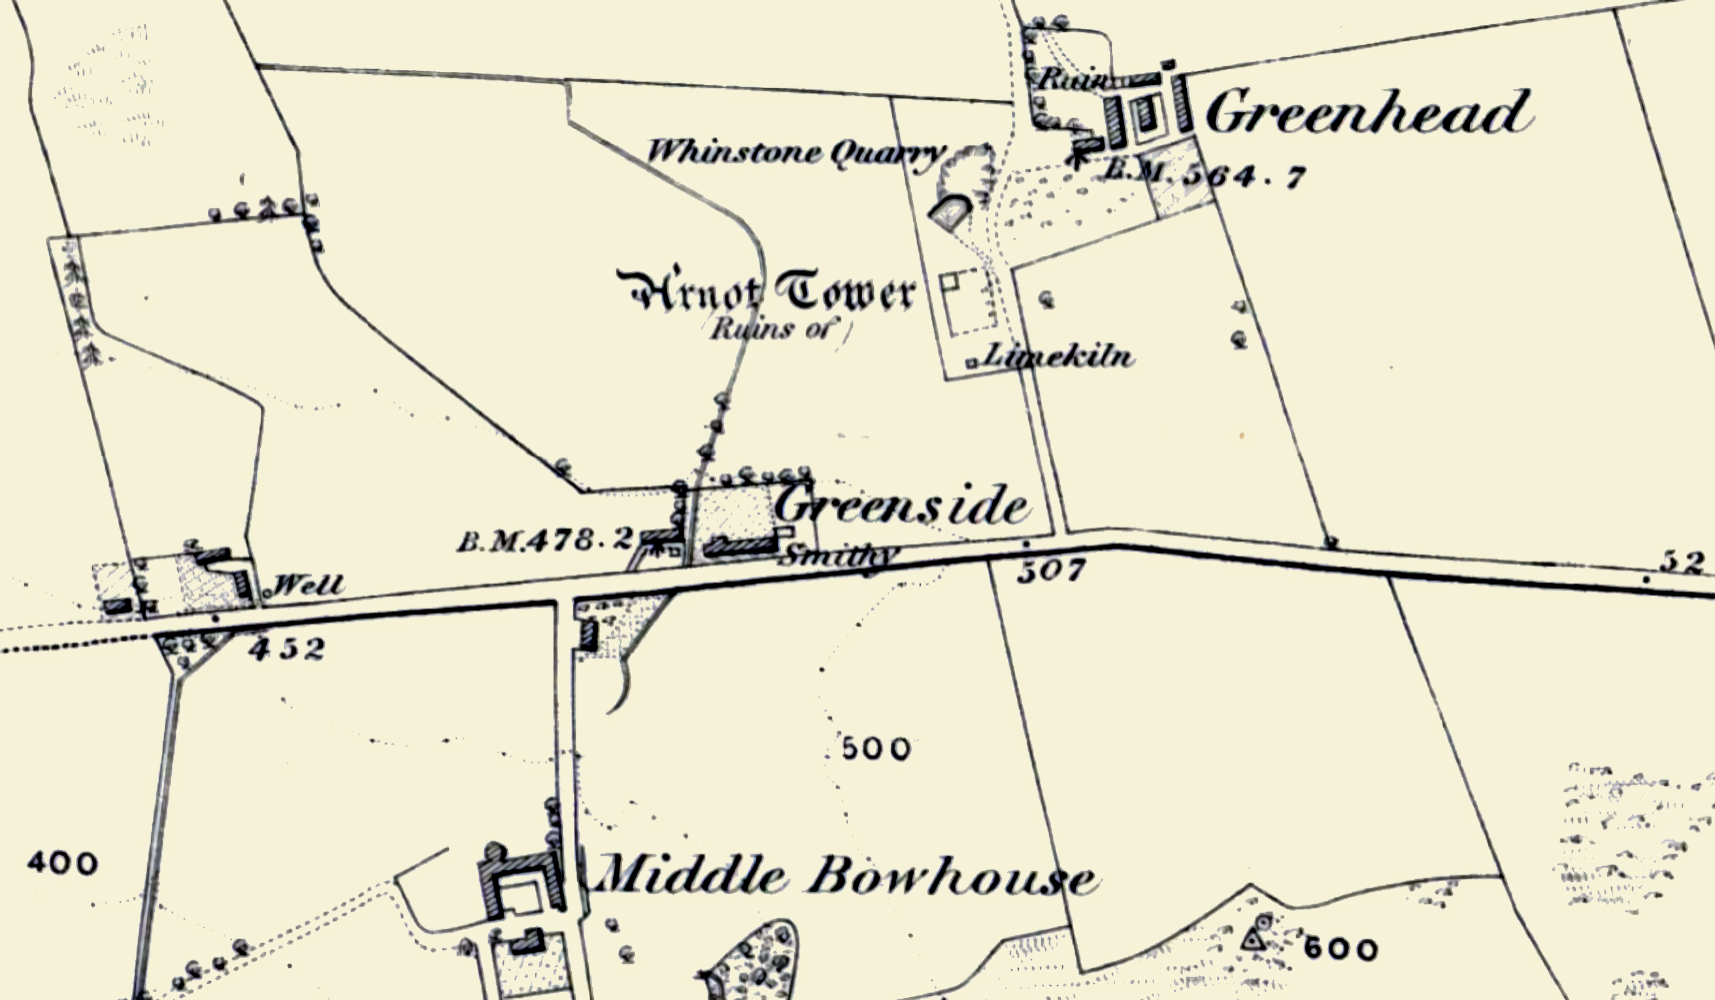 Barony of Balvaird, 1896 map Perth and Clackmannan